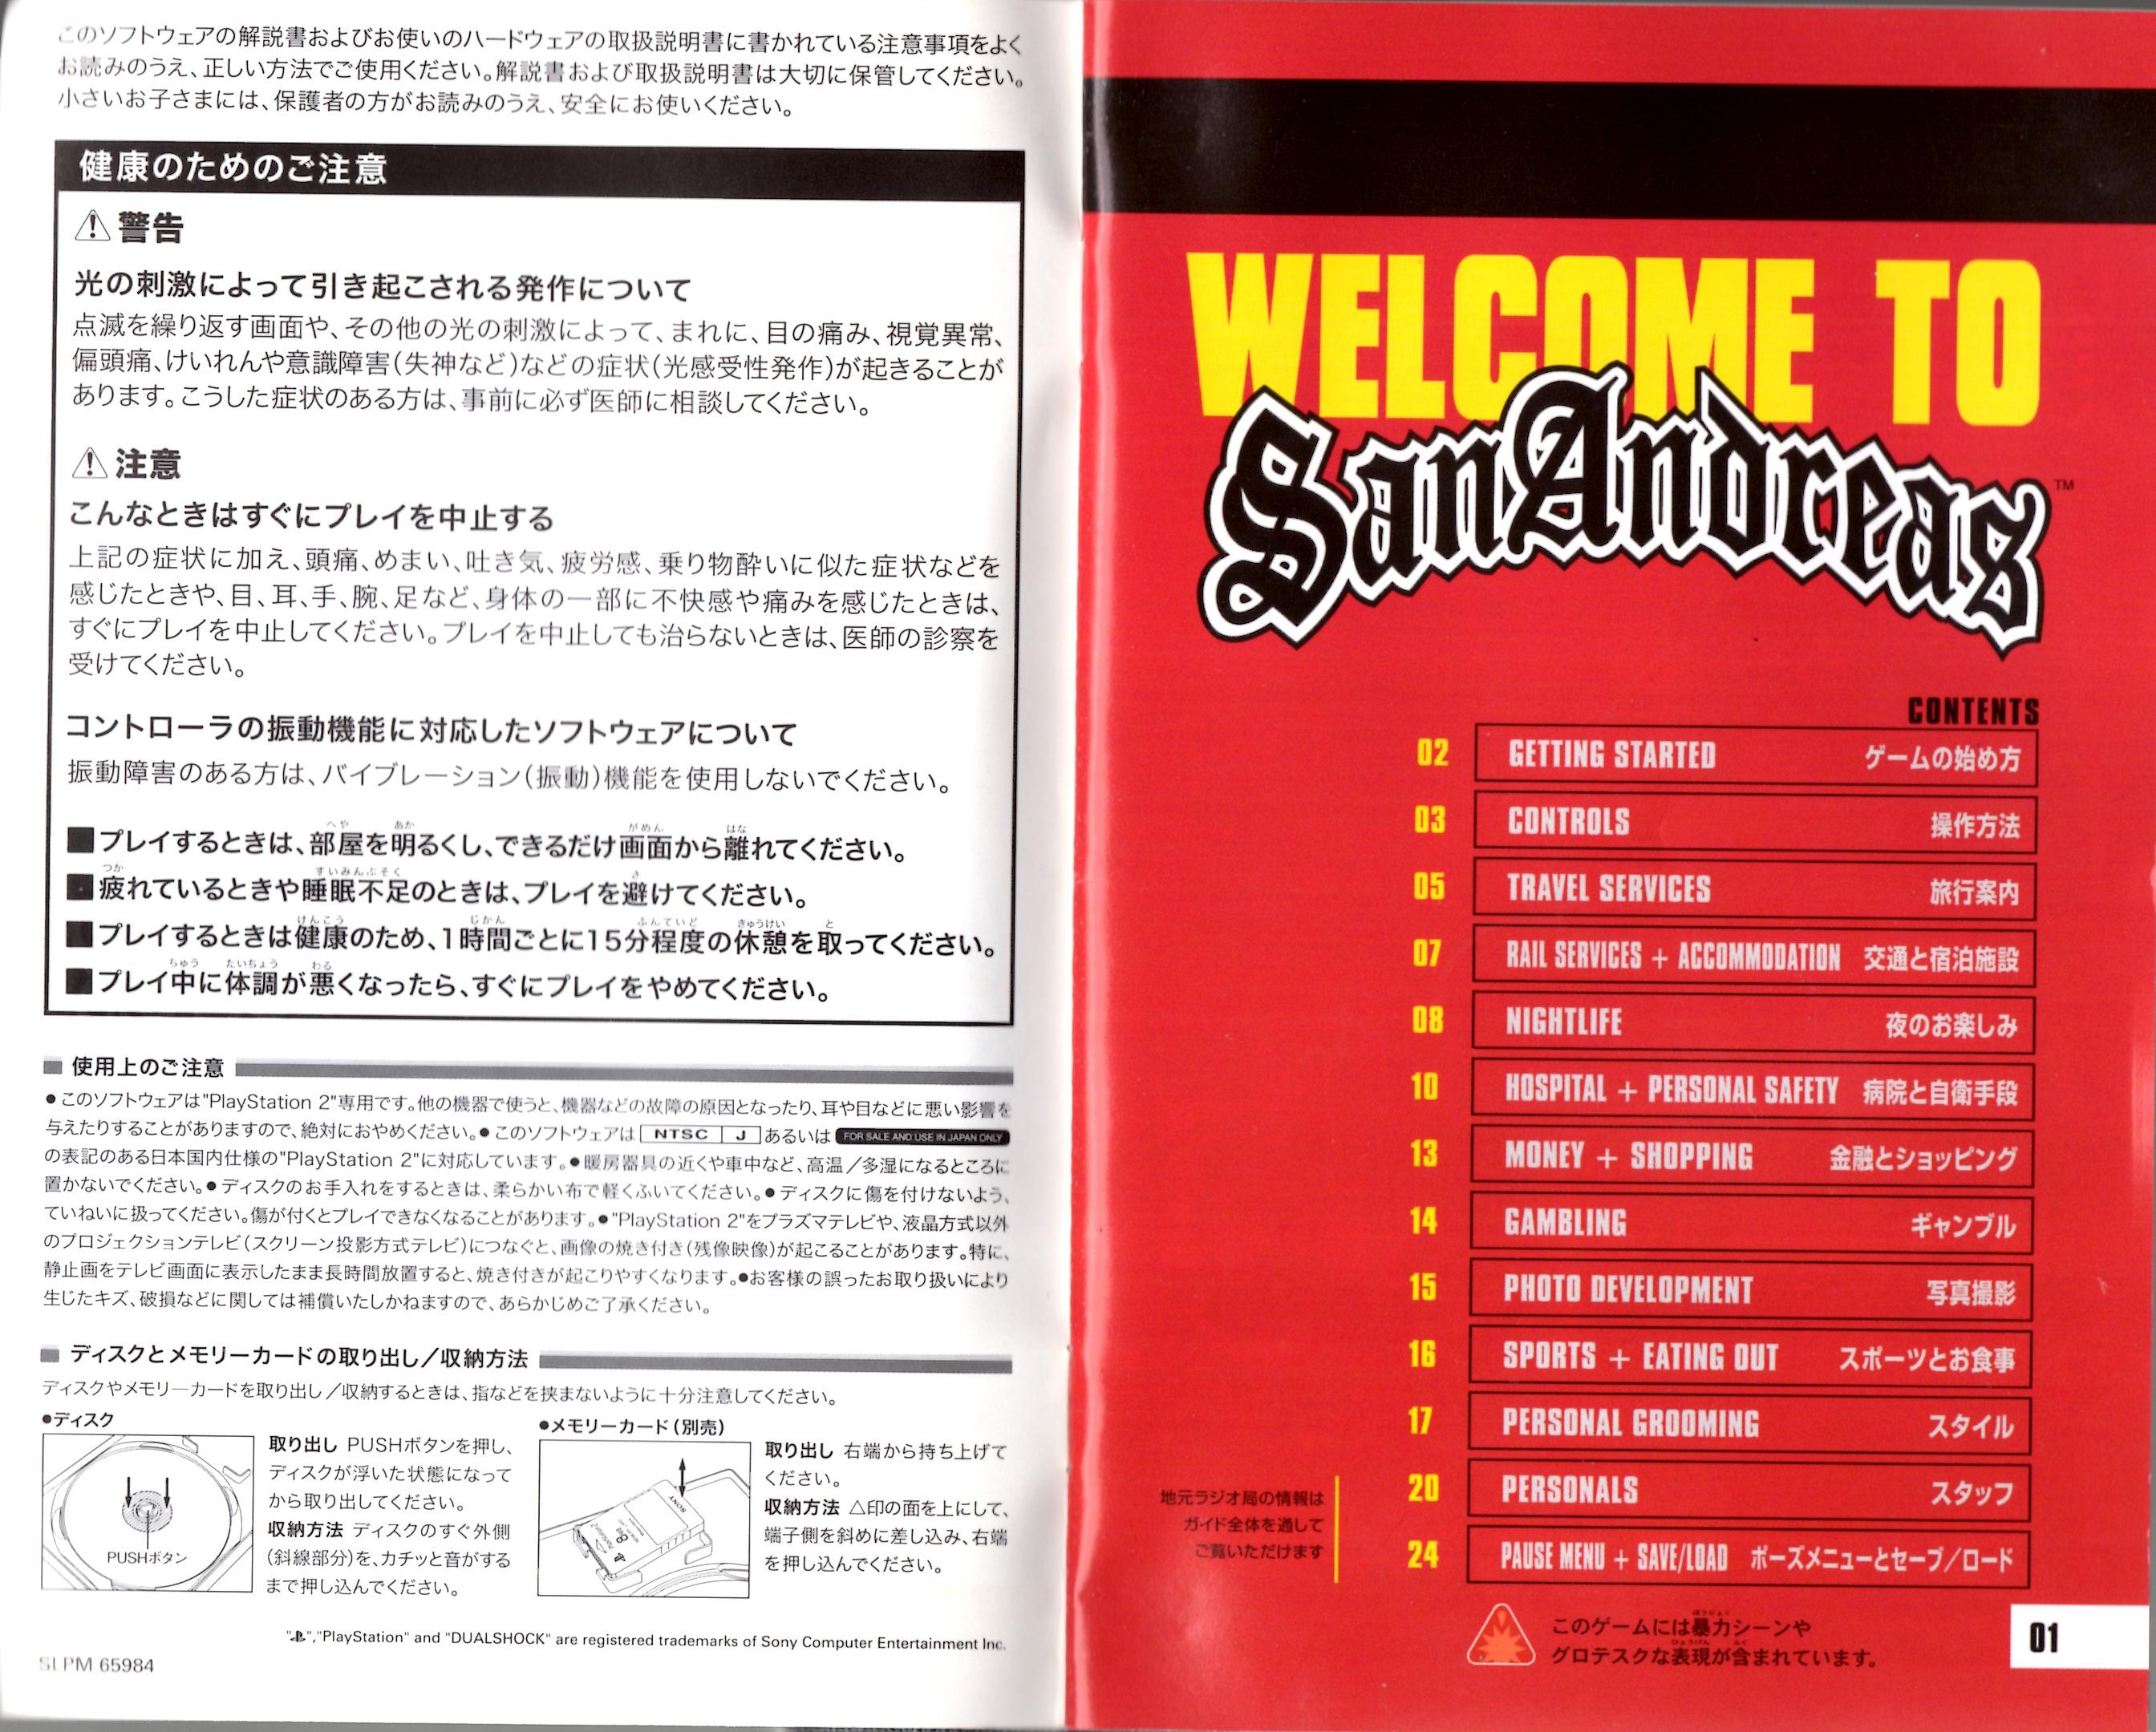 Releases in Japan: GTA SA PS2